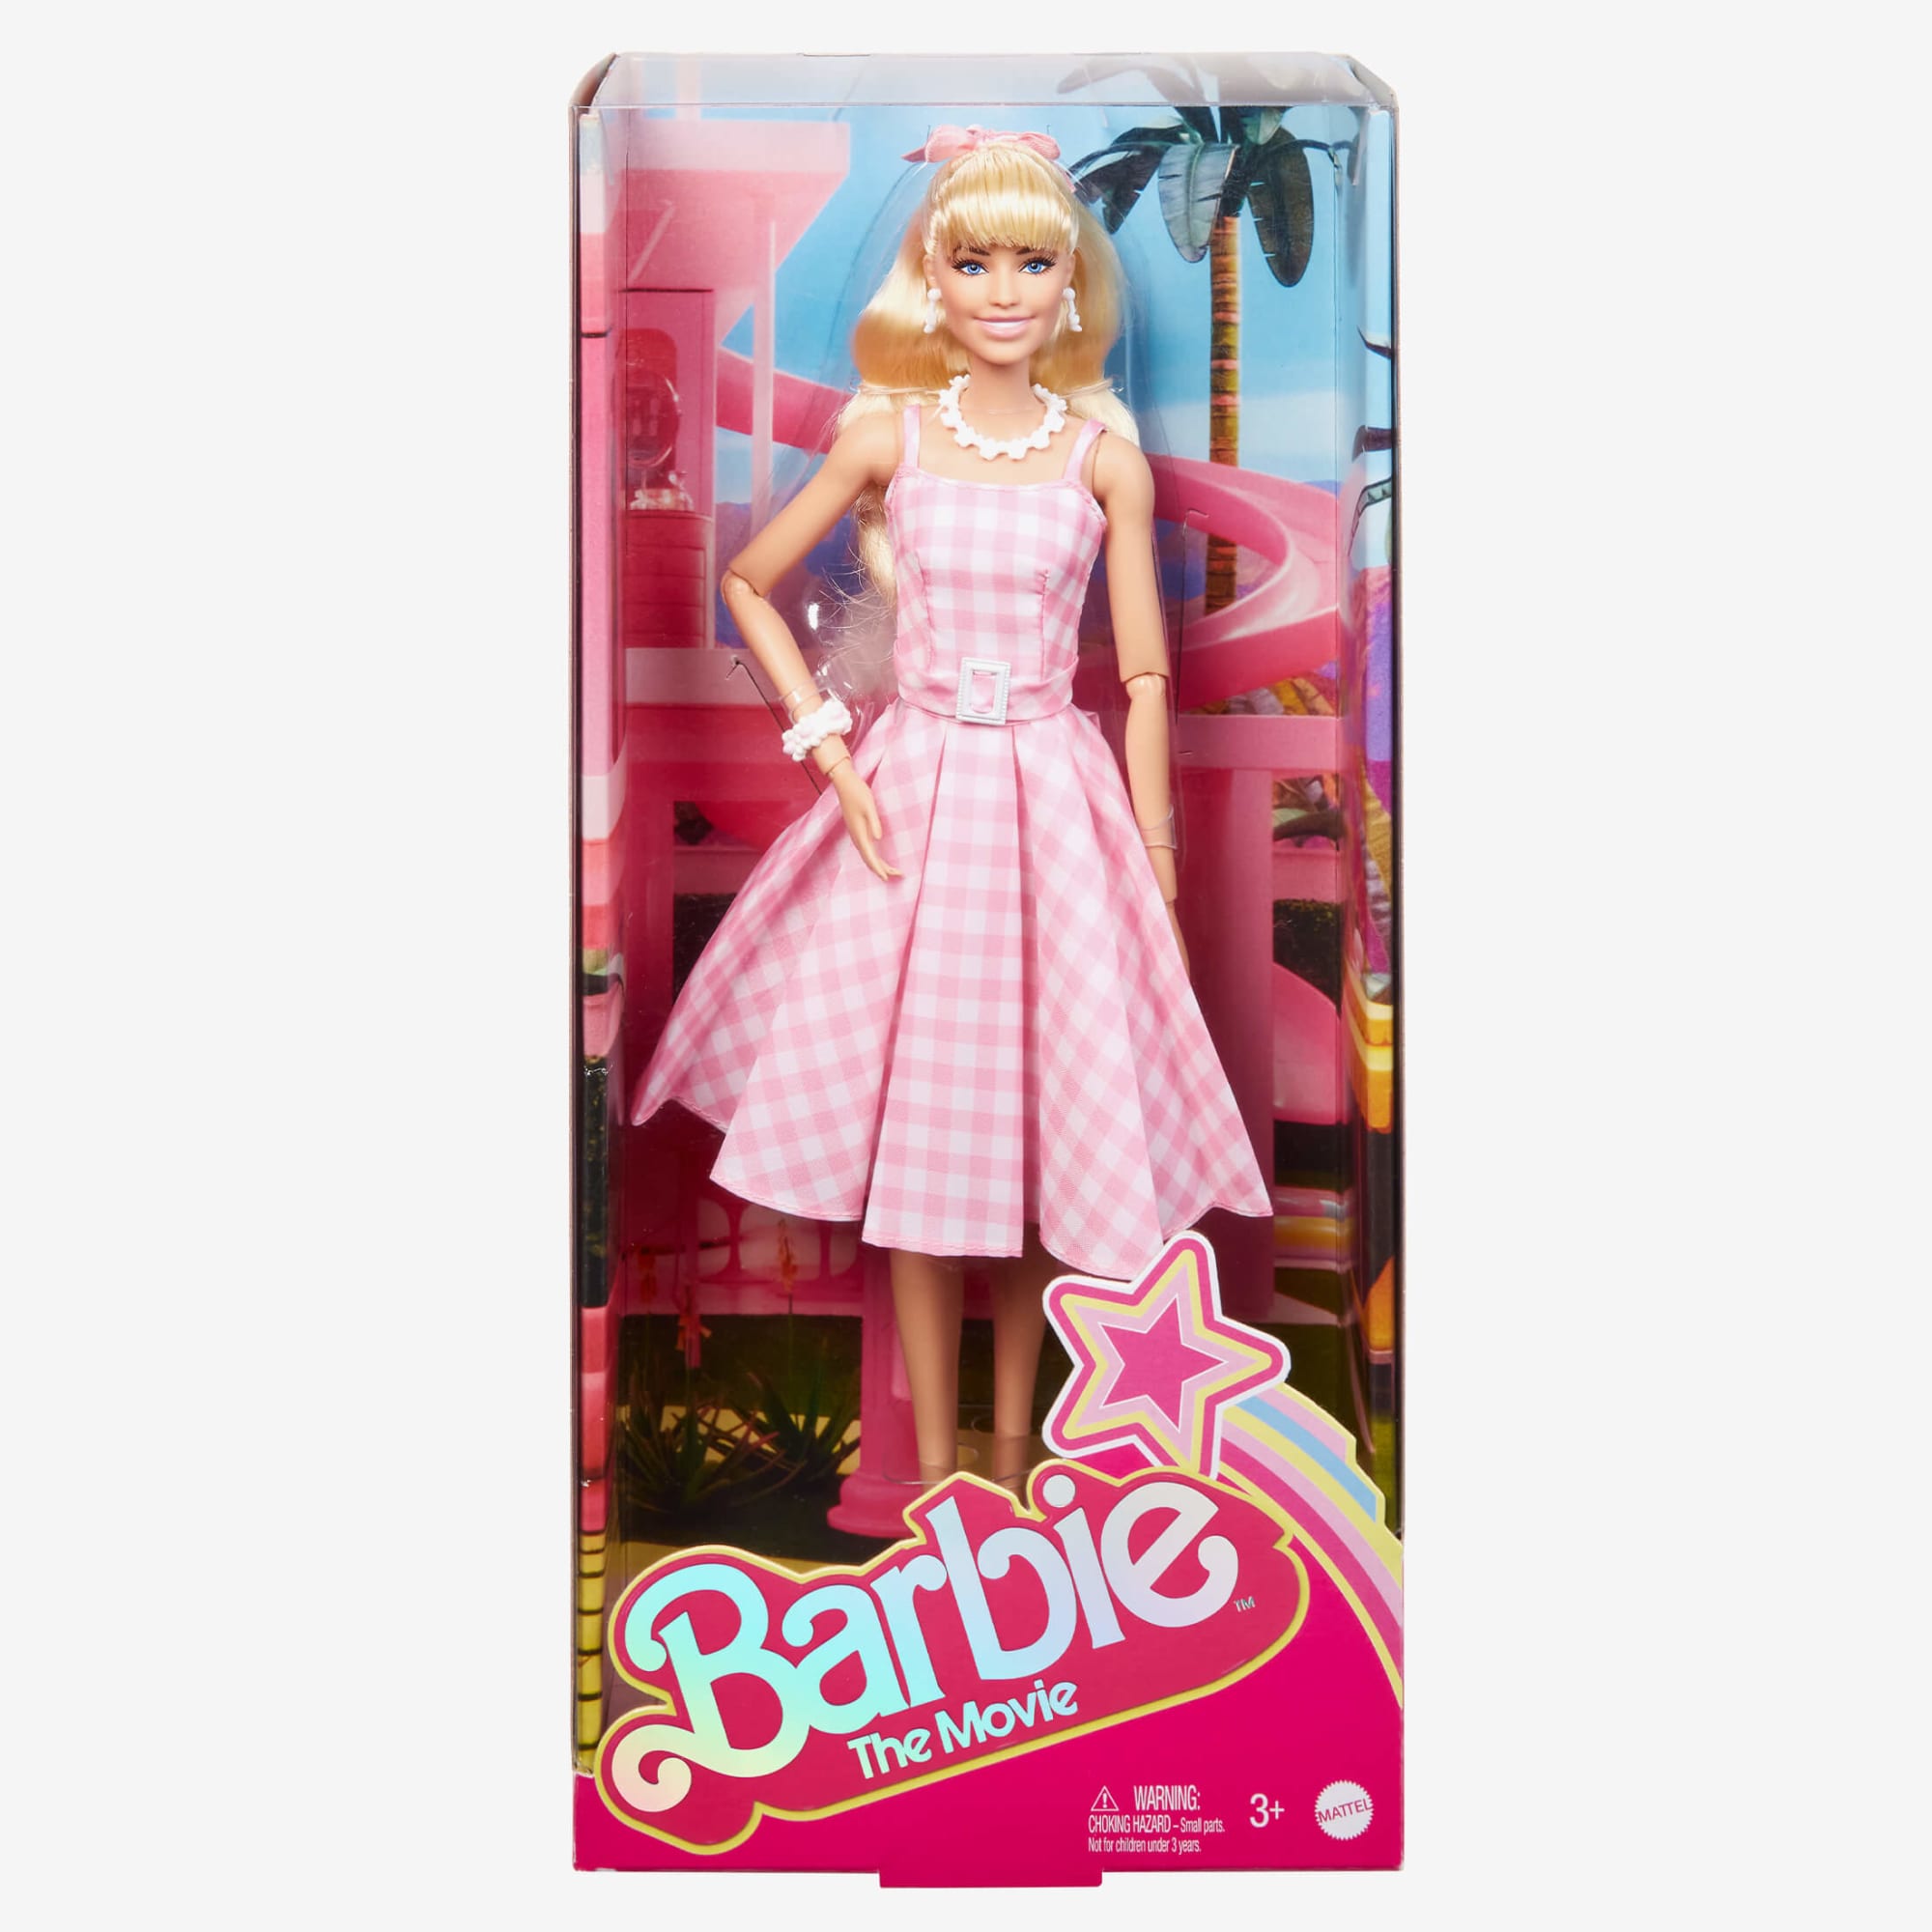 I finally saw The Barbie Movie. 🎀 I wore a pink gingham dress